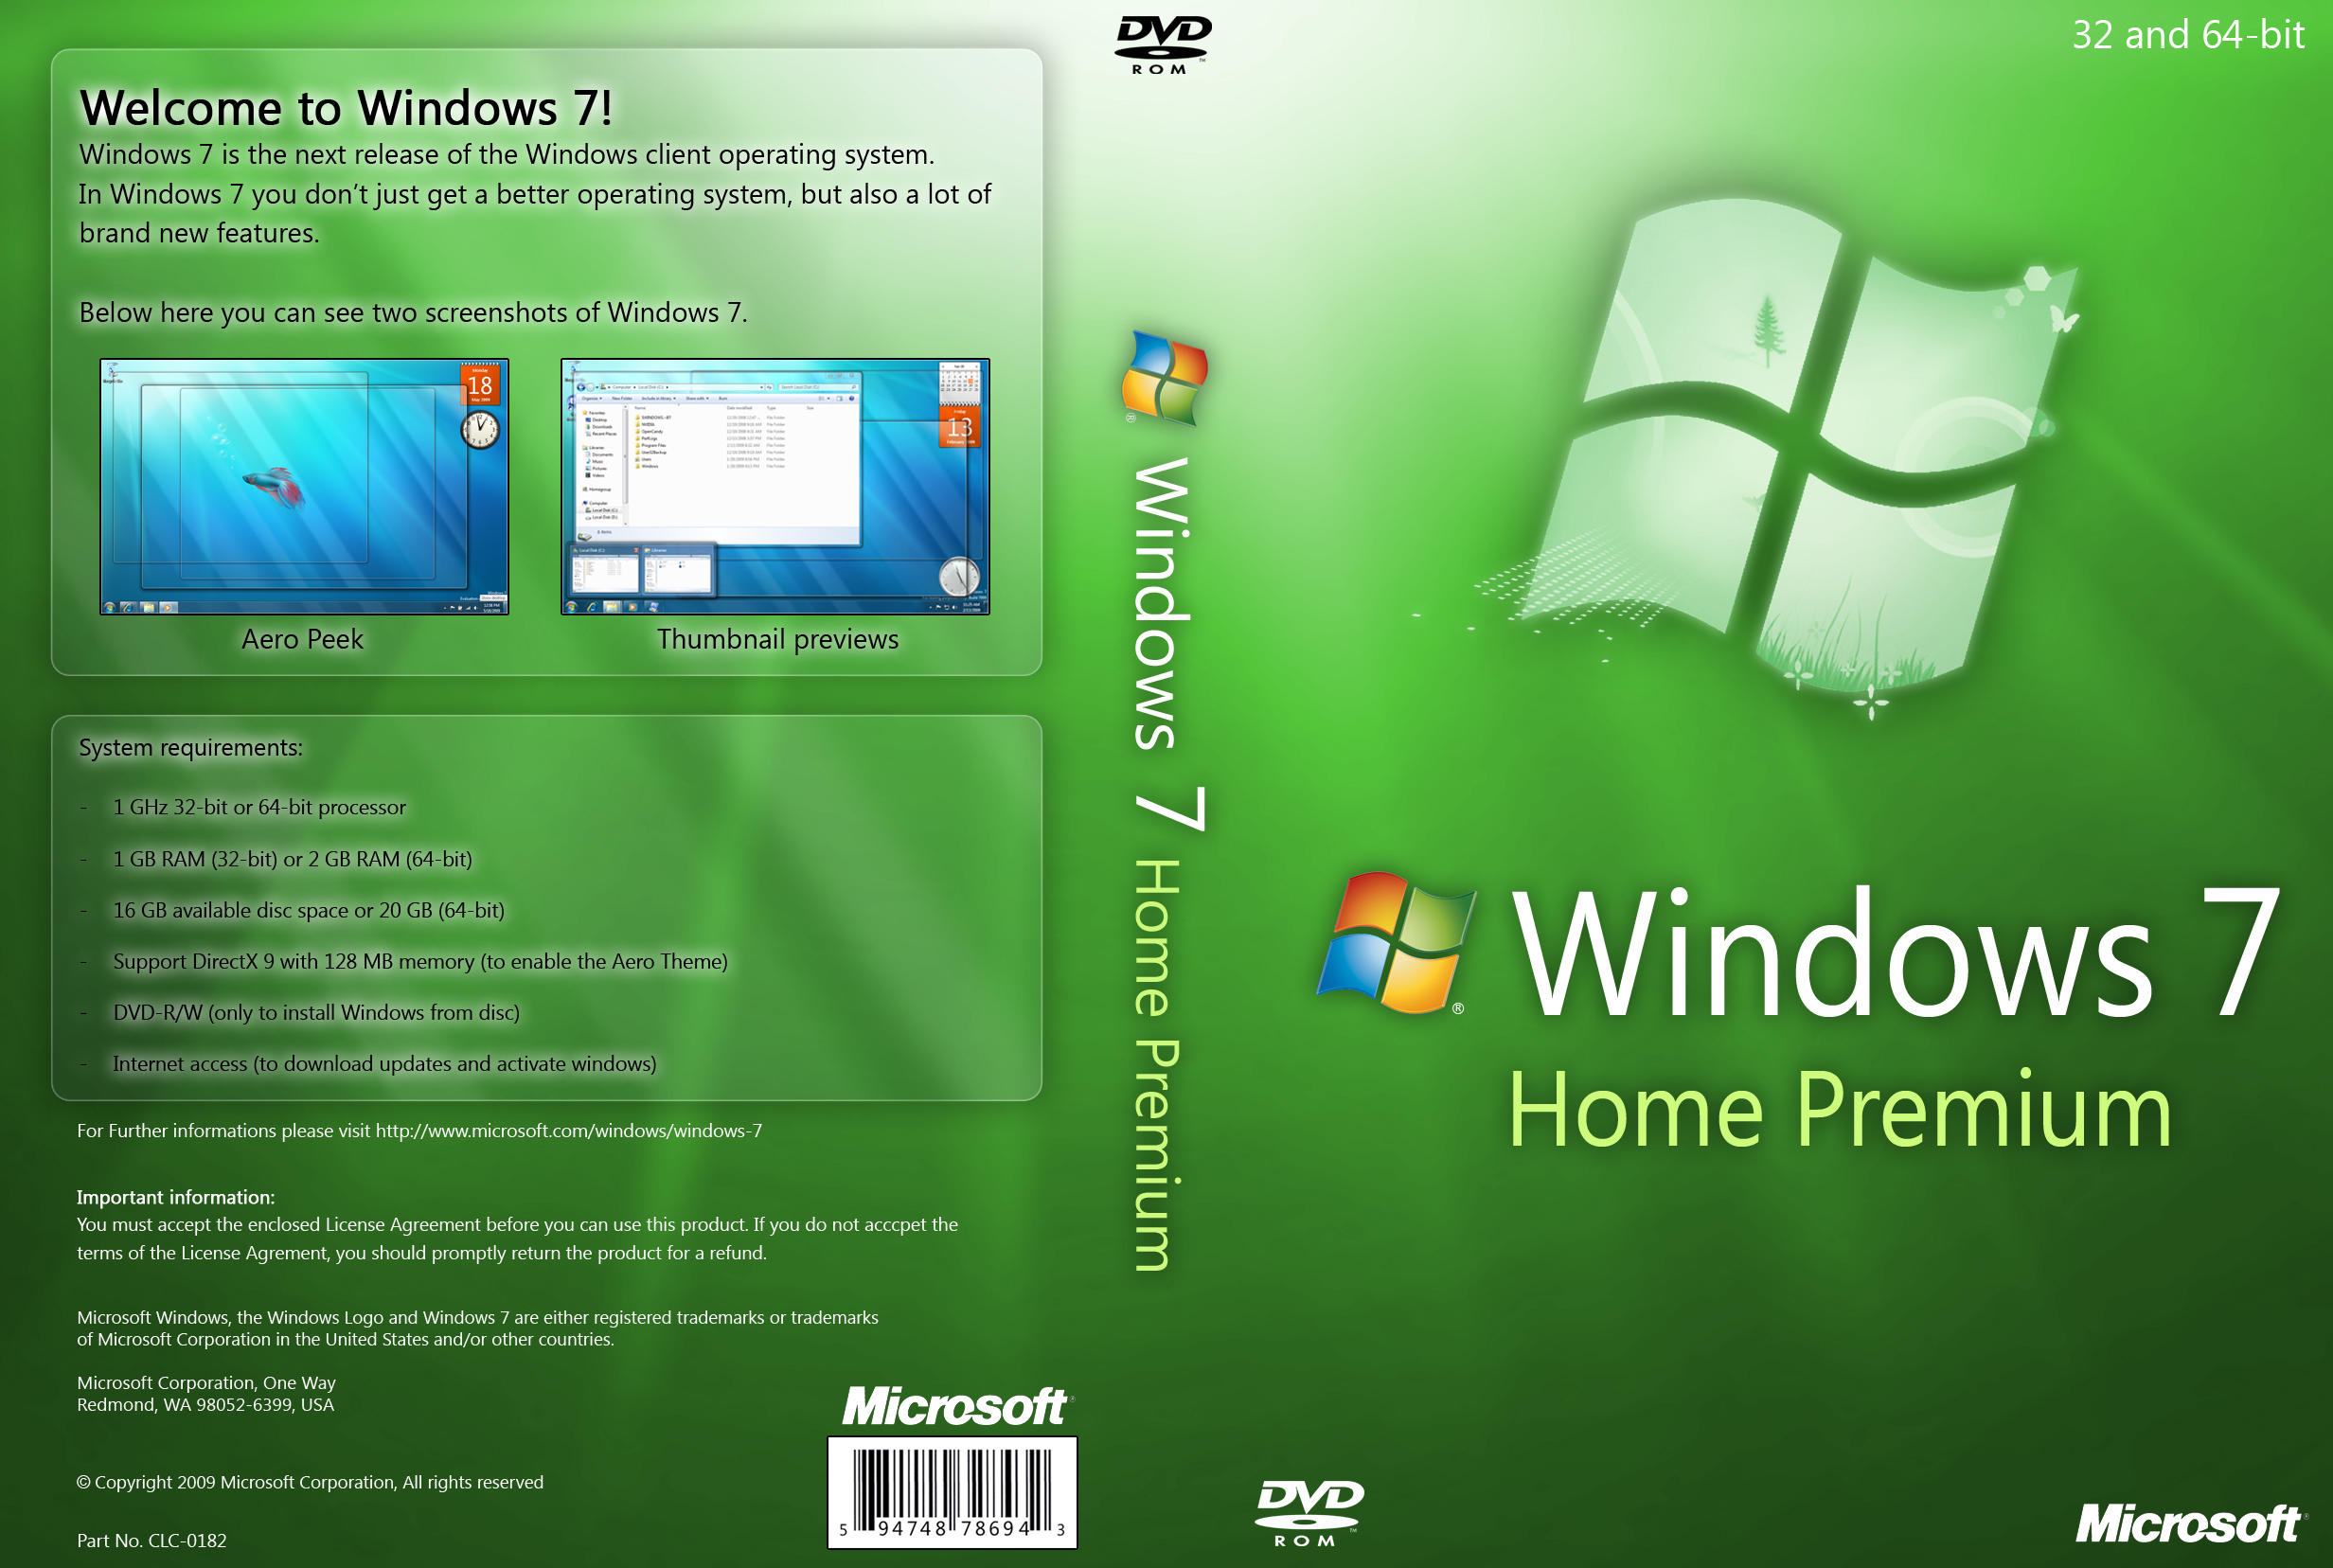 windows-7-Home_Premium-dvd-cover-11c4d38.jpg (500×334)